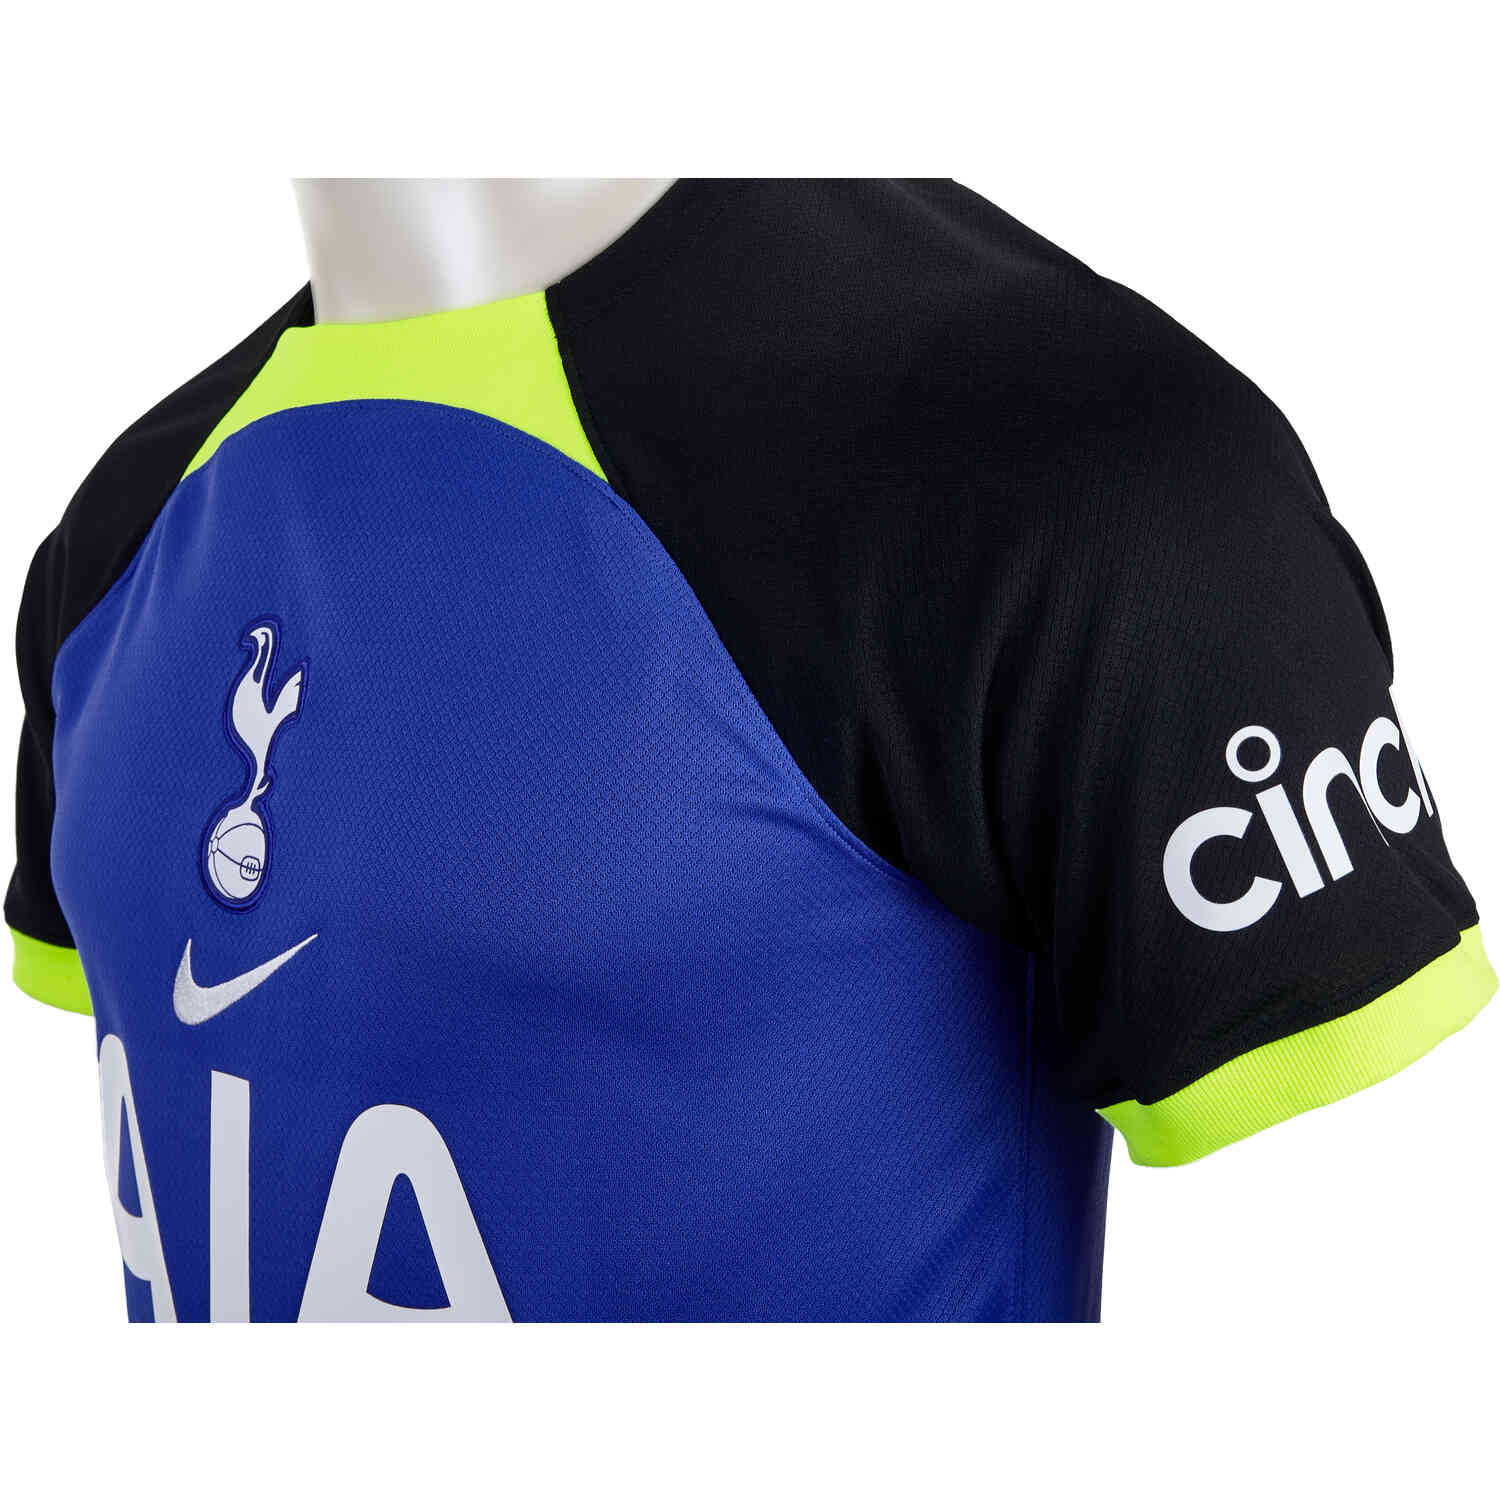 Tottenham Hotspur Jersey Cheap,Tottenham 17 18 Kit,Size:18-19 Tottenham  black with purple sleeves jacket set